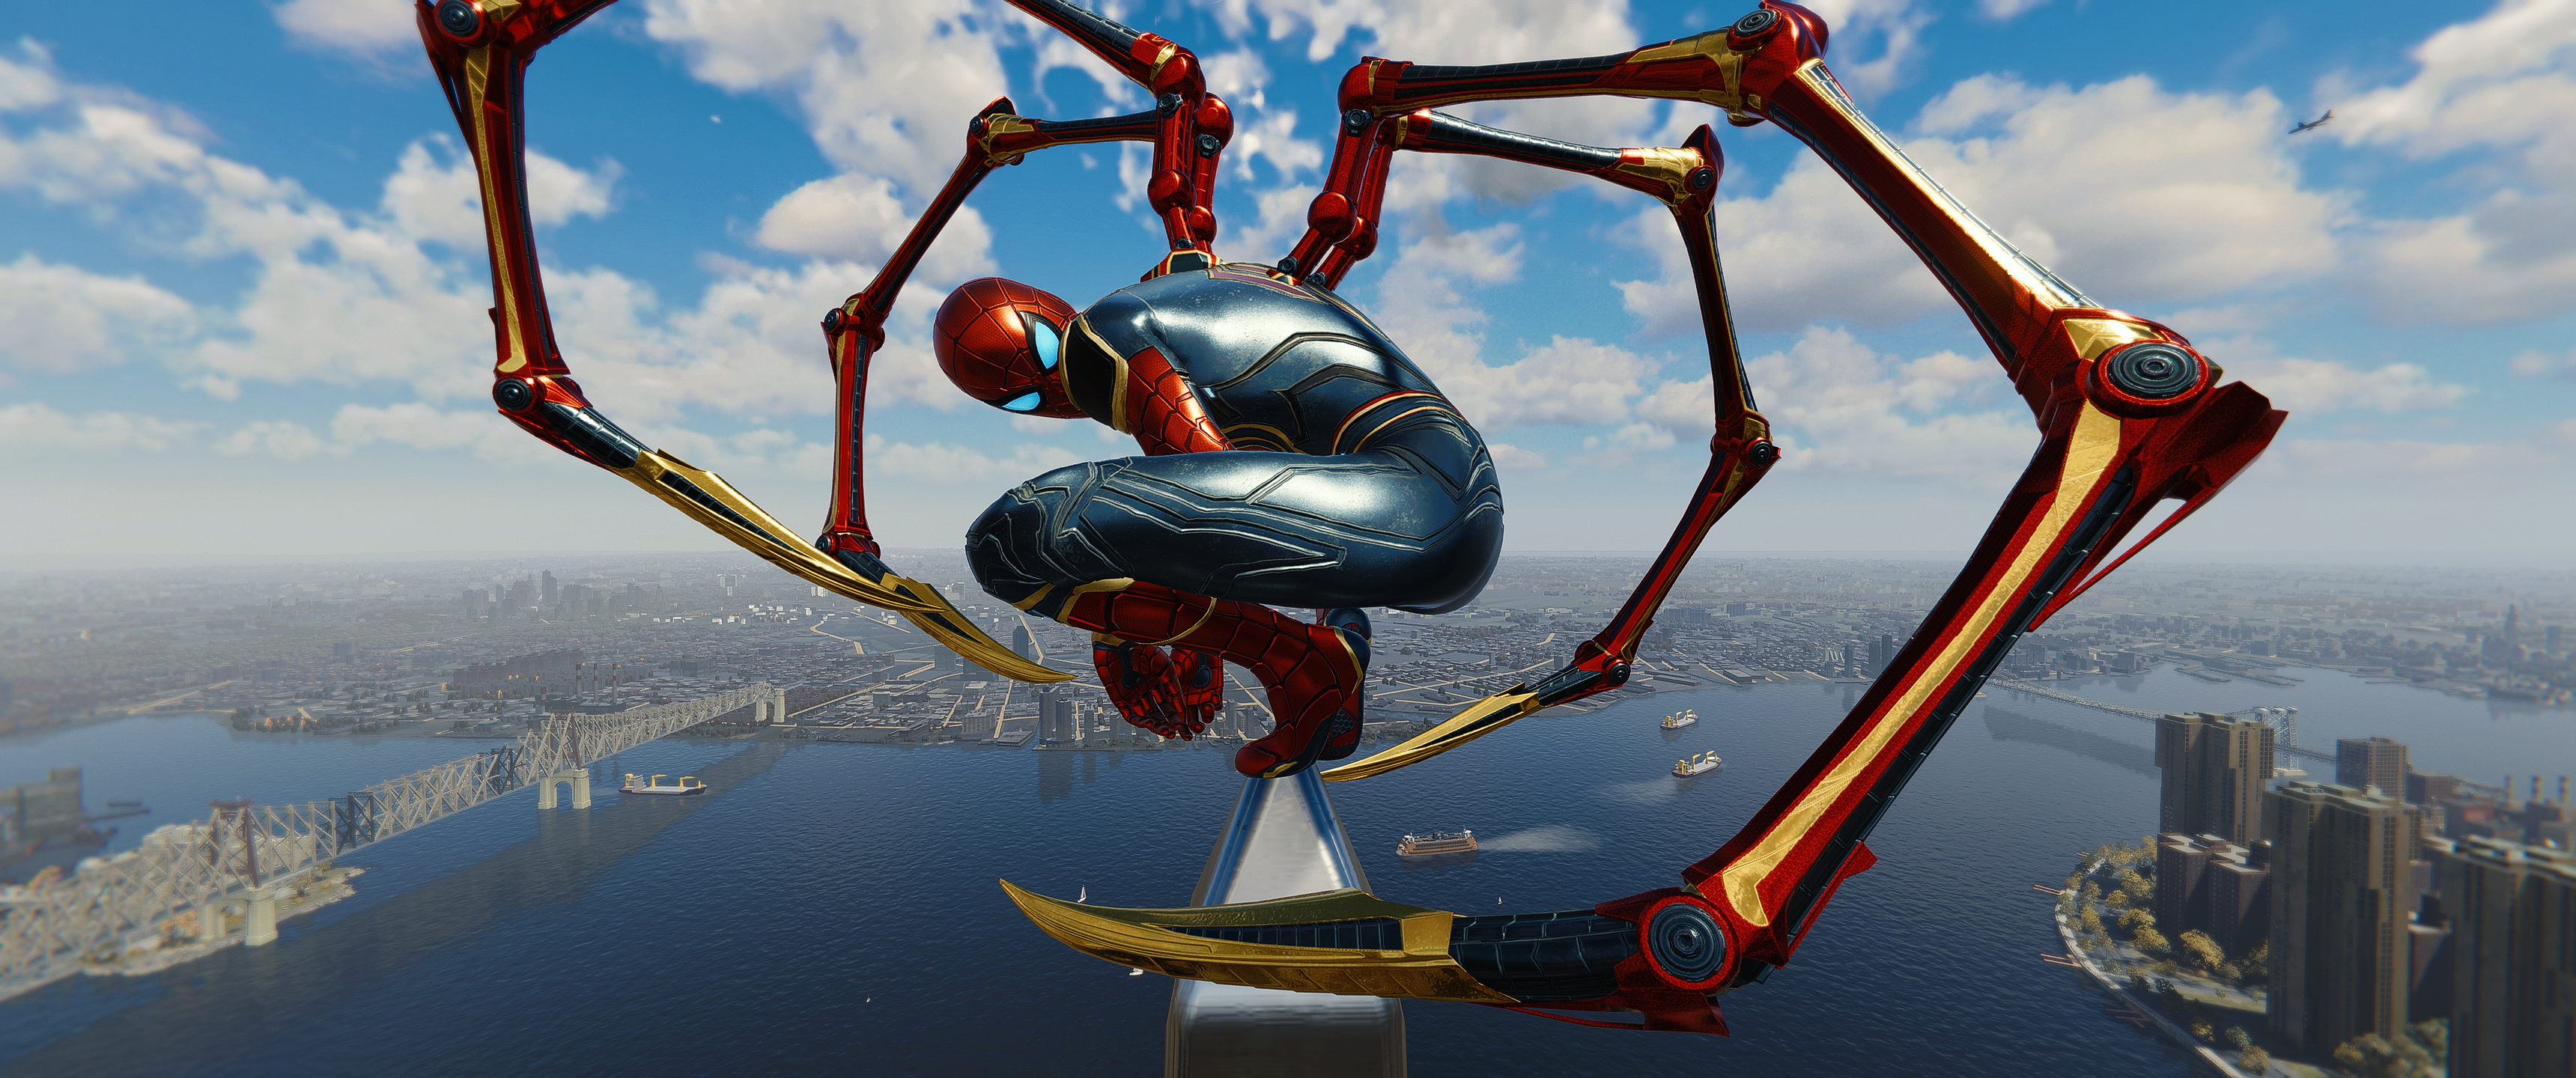 General 3440x1440 Spider-Man Remastered Spider-Man Games posters video games bodysuit clouds sky city cityscape water bridge boat superhero digital art